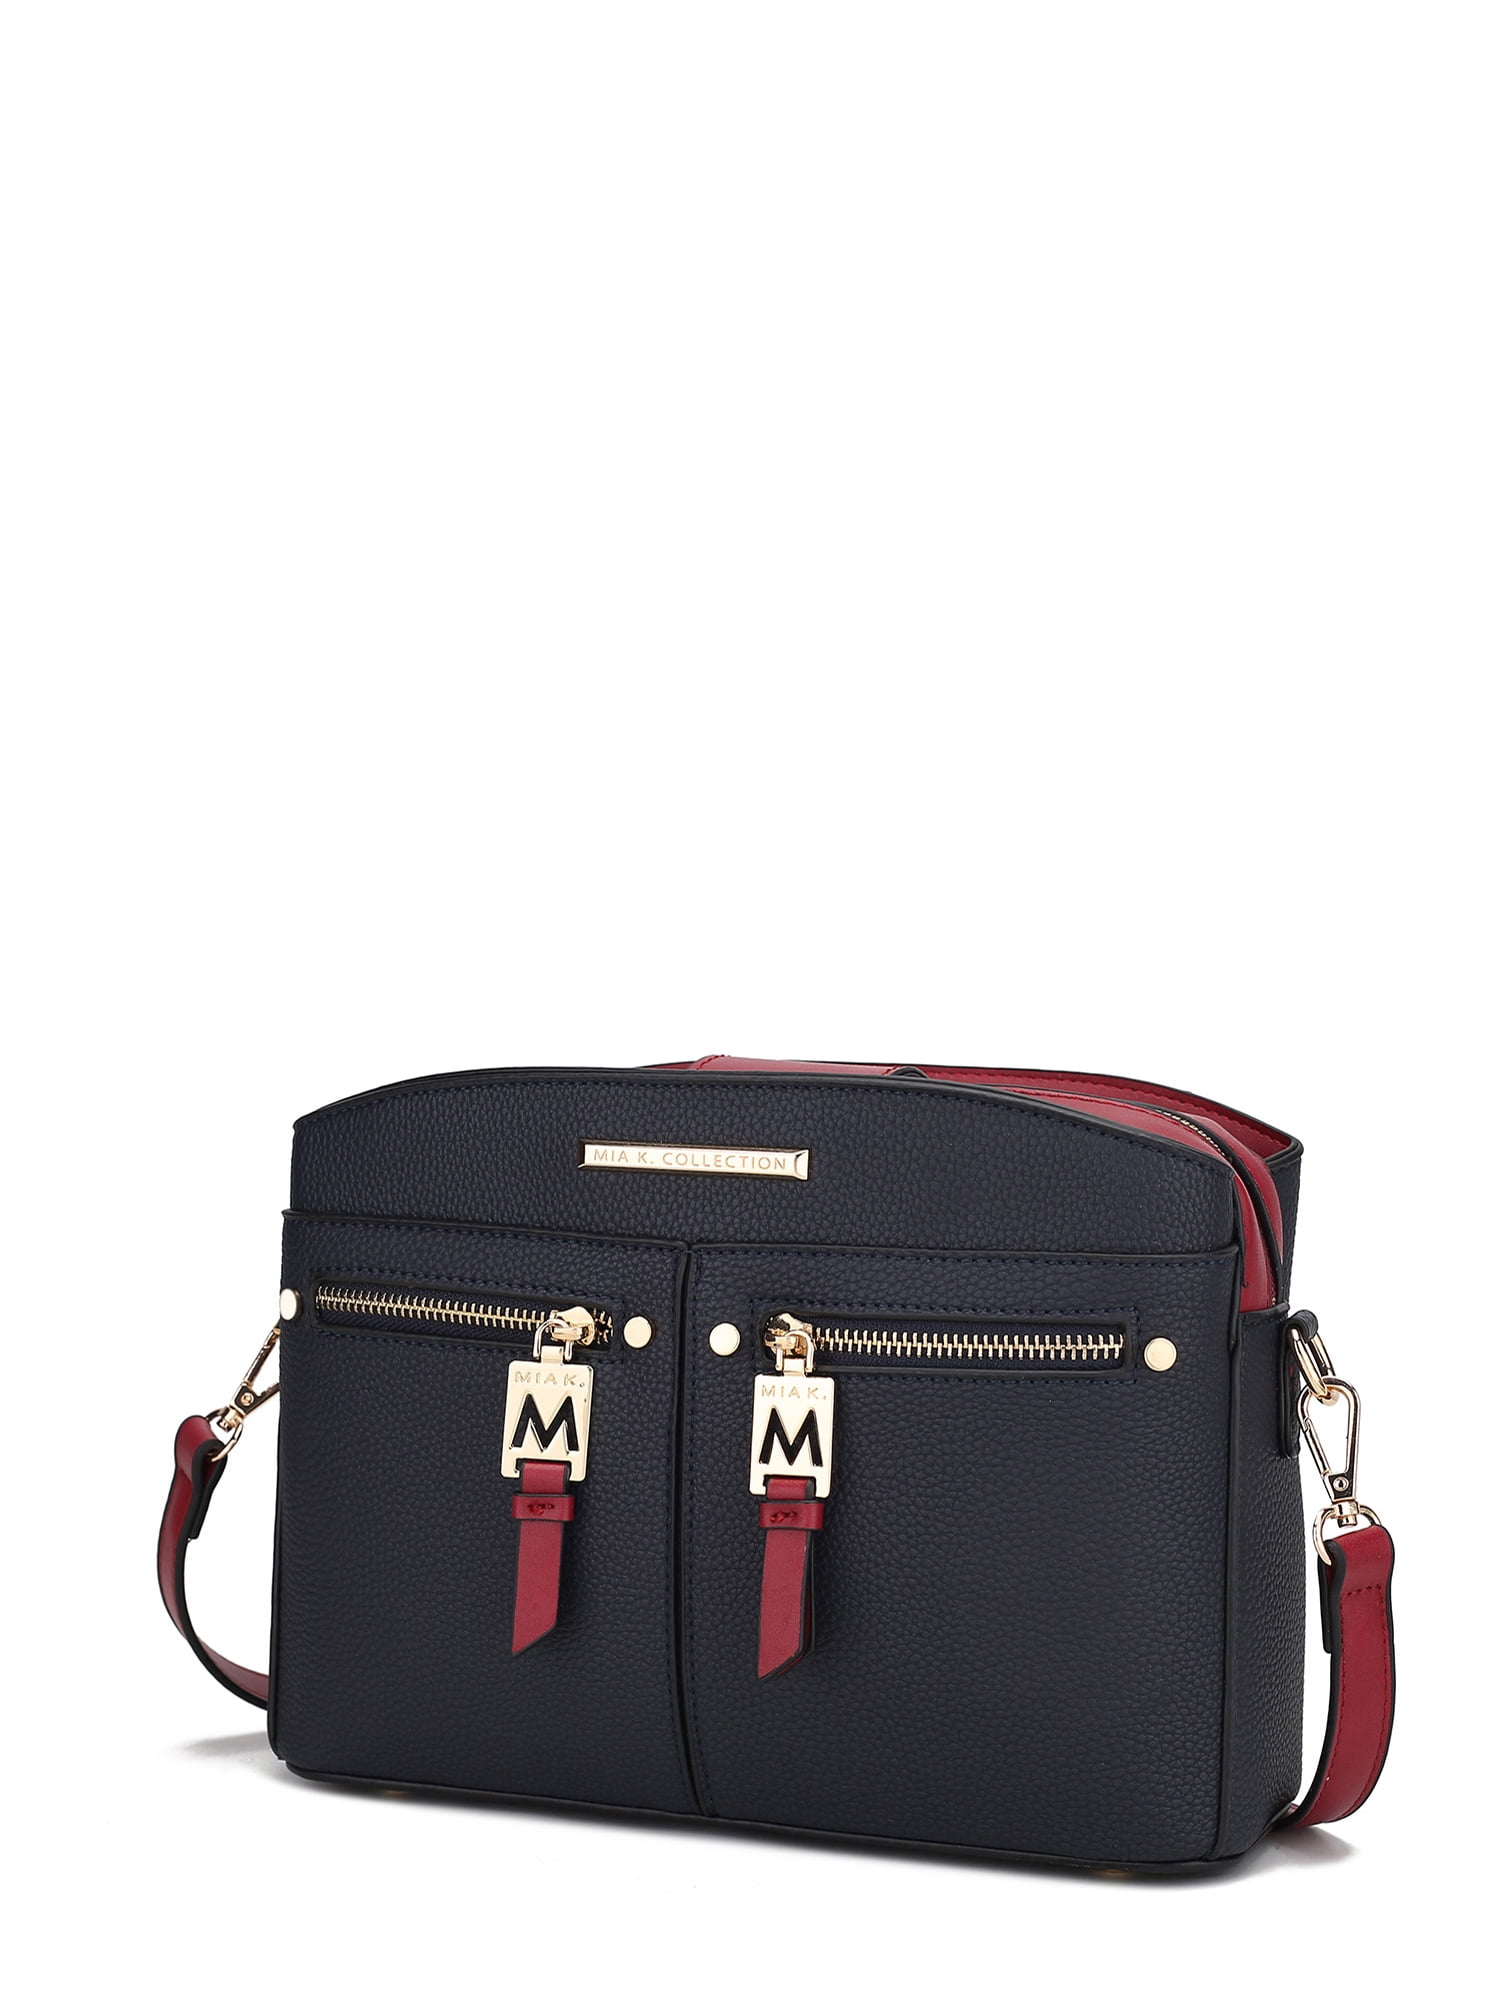 Mia K. Collection Crossbody Bag For Women - Removable Adjustable Strap - Vegan Leather Crossover Designer Messenger Purse